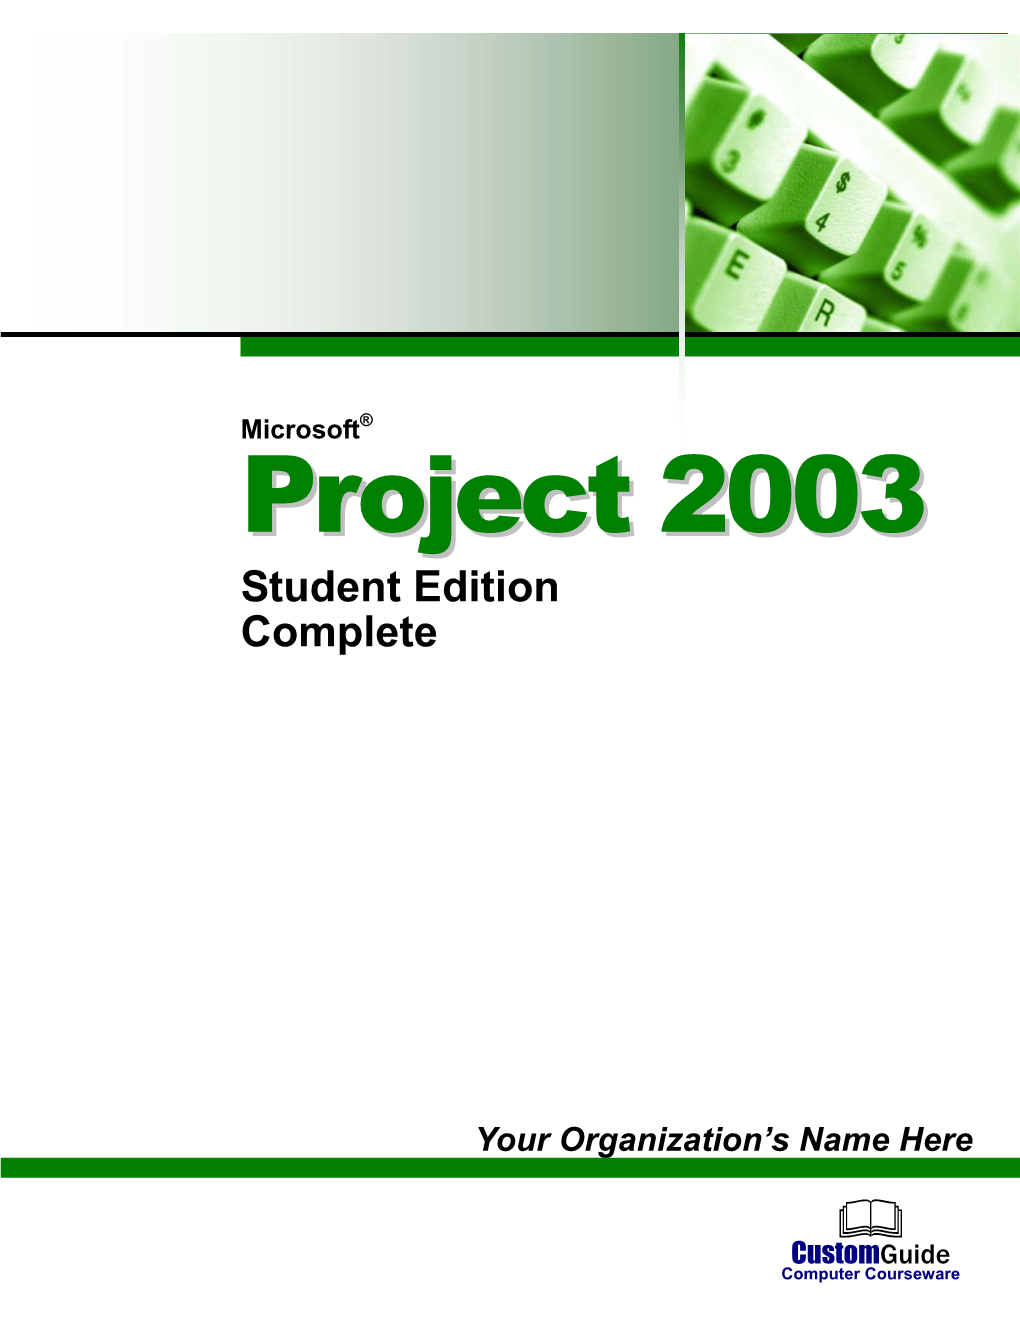 Microsoft® Pprroojjeecctt 22000033 Student Edition Complete